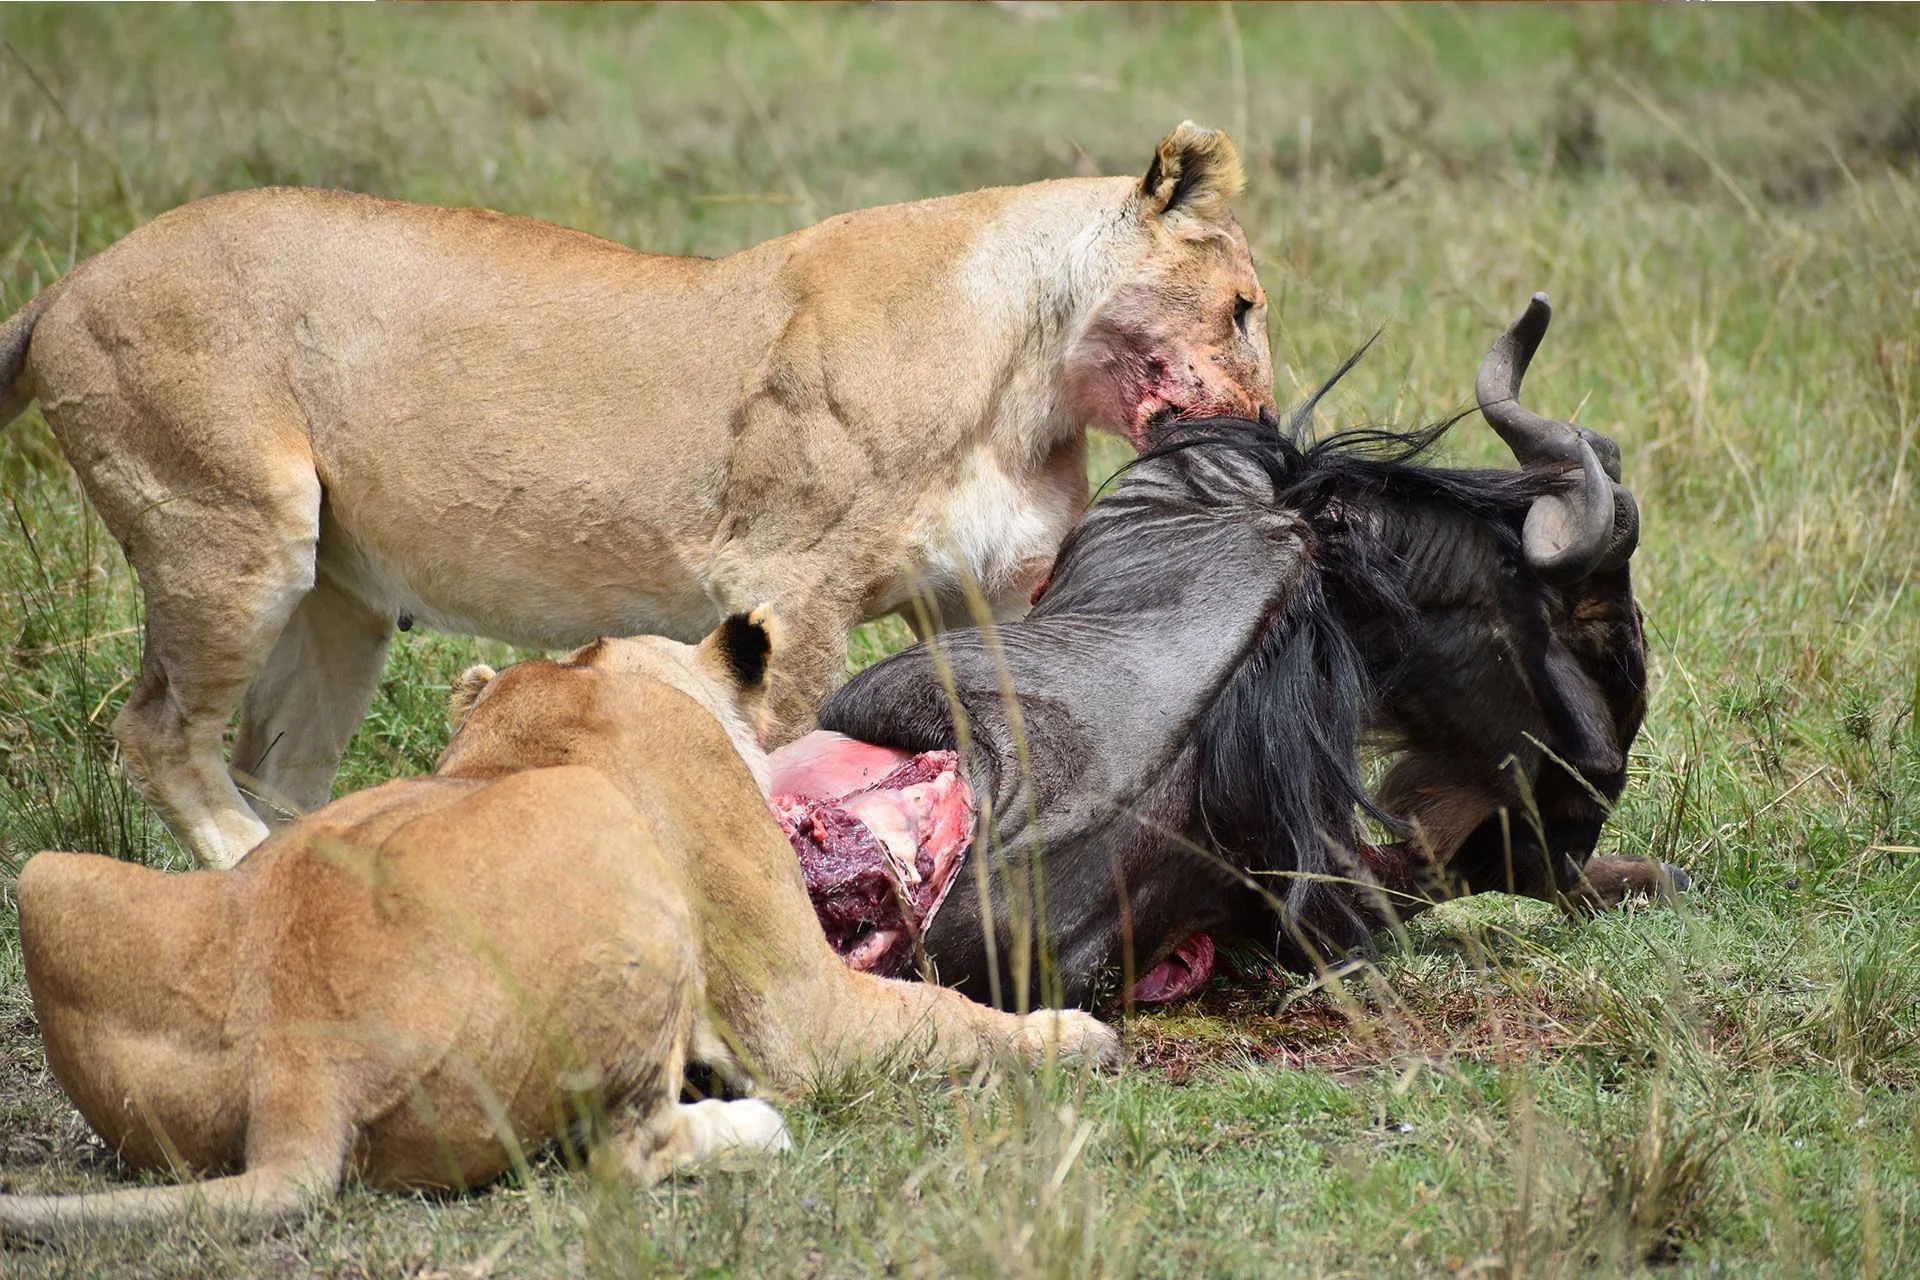 Kenya safari tours in August - lions feeding in Masai Mara National Reserve